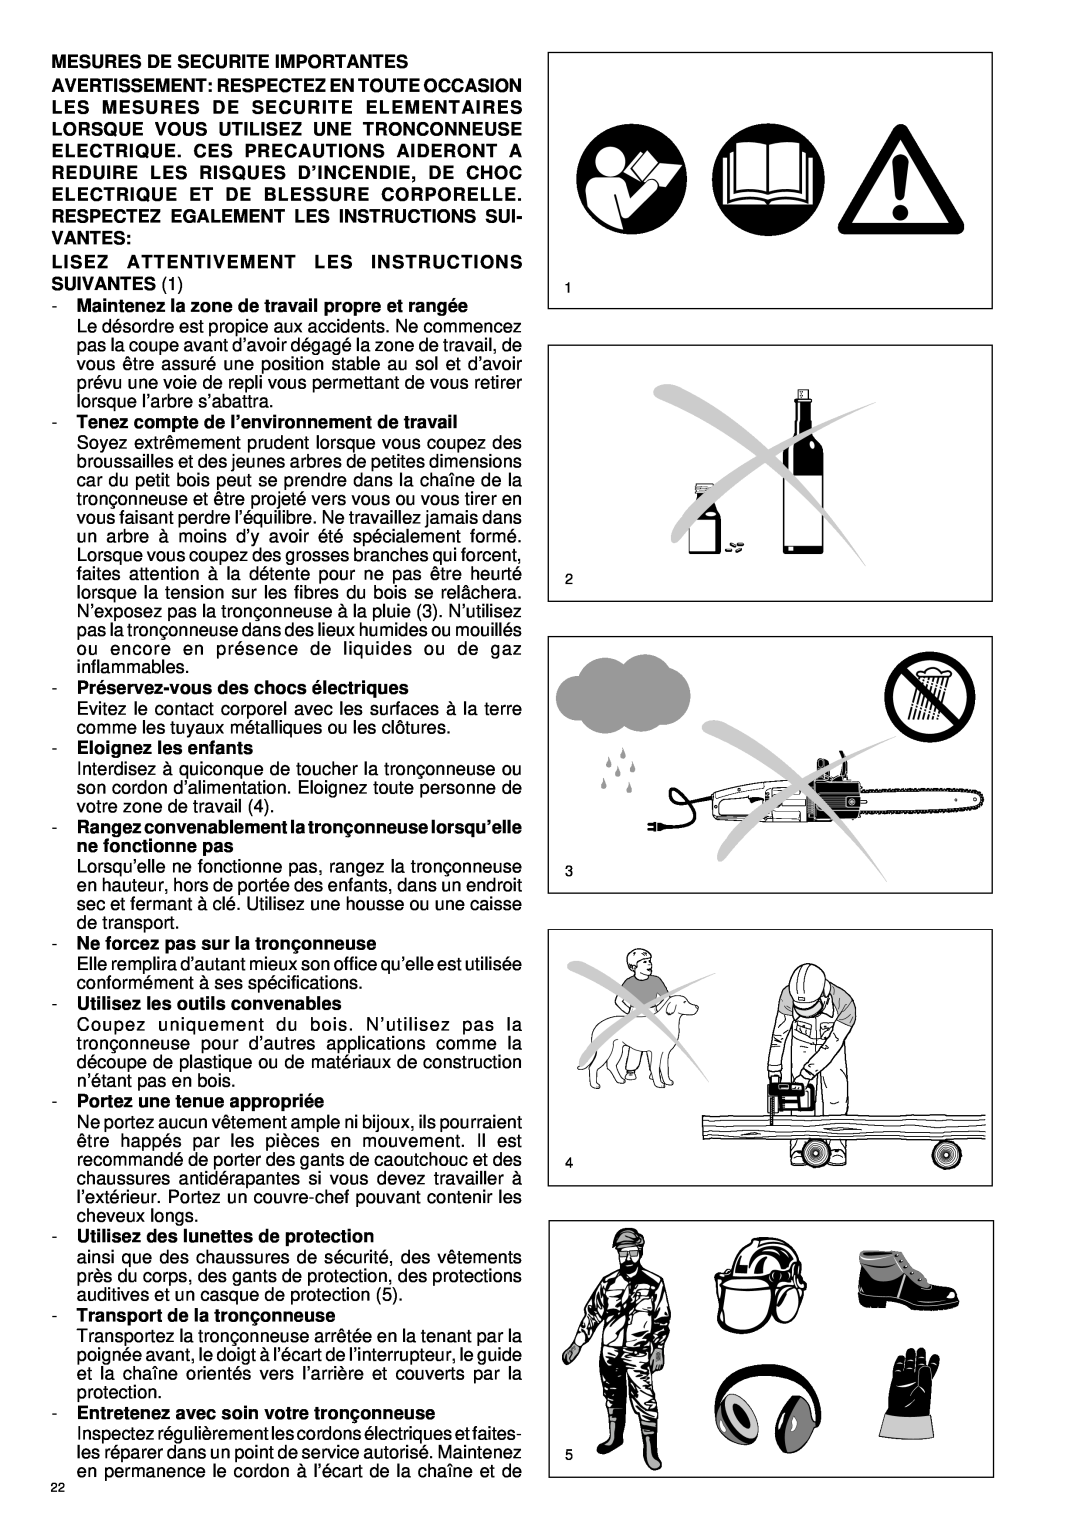 Makita UC 3000, UC 3500, UC 4000 manual Lisez Attentivement Les Instructions Suivantes 